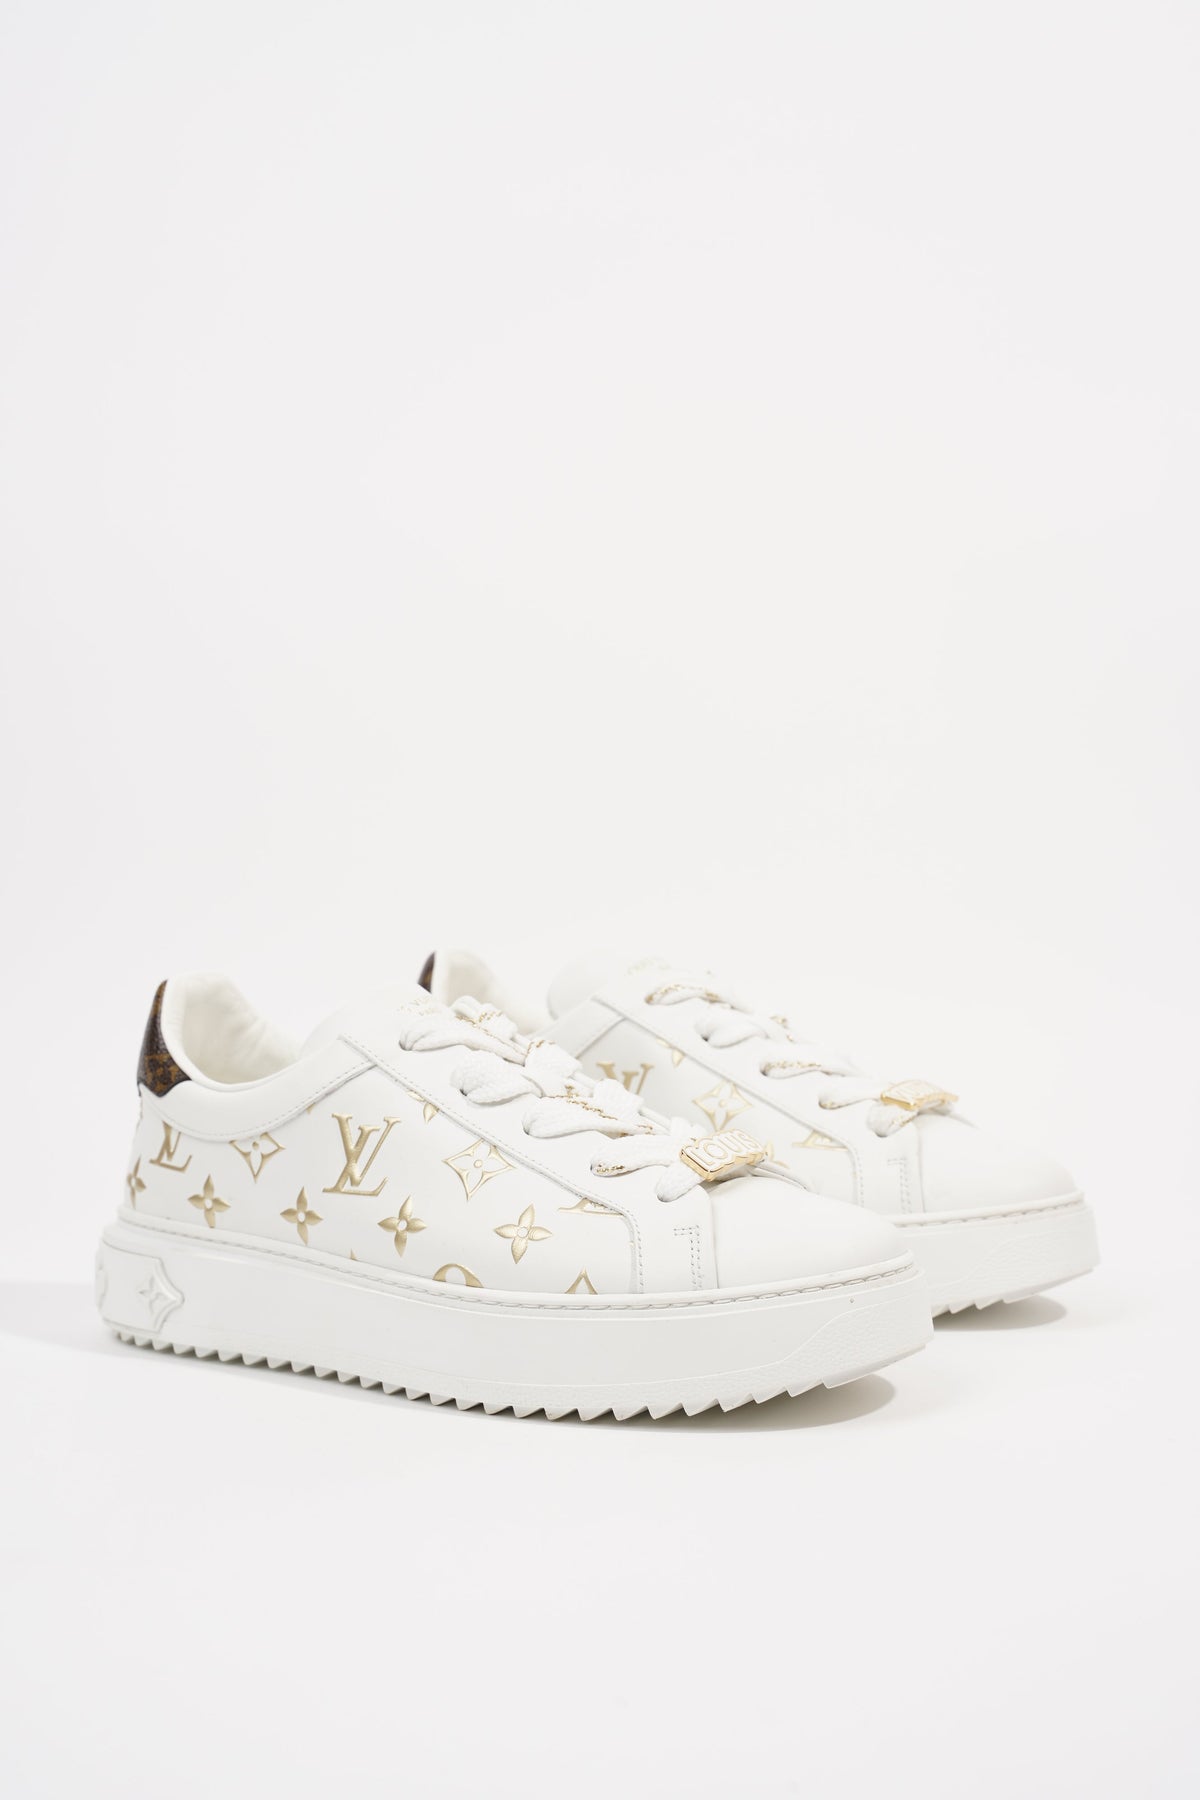 Louis Vuitton lv woman shoes white leather sneakers | Fendi shoes, Louis  vuitton shoes, Stylish sneakers women